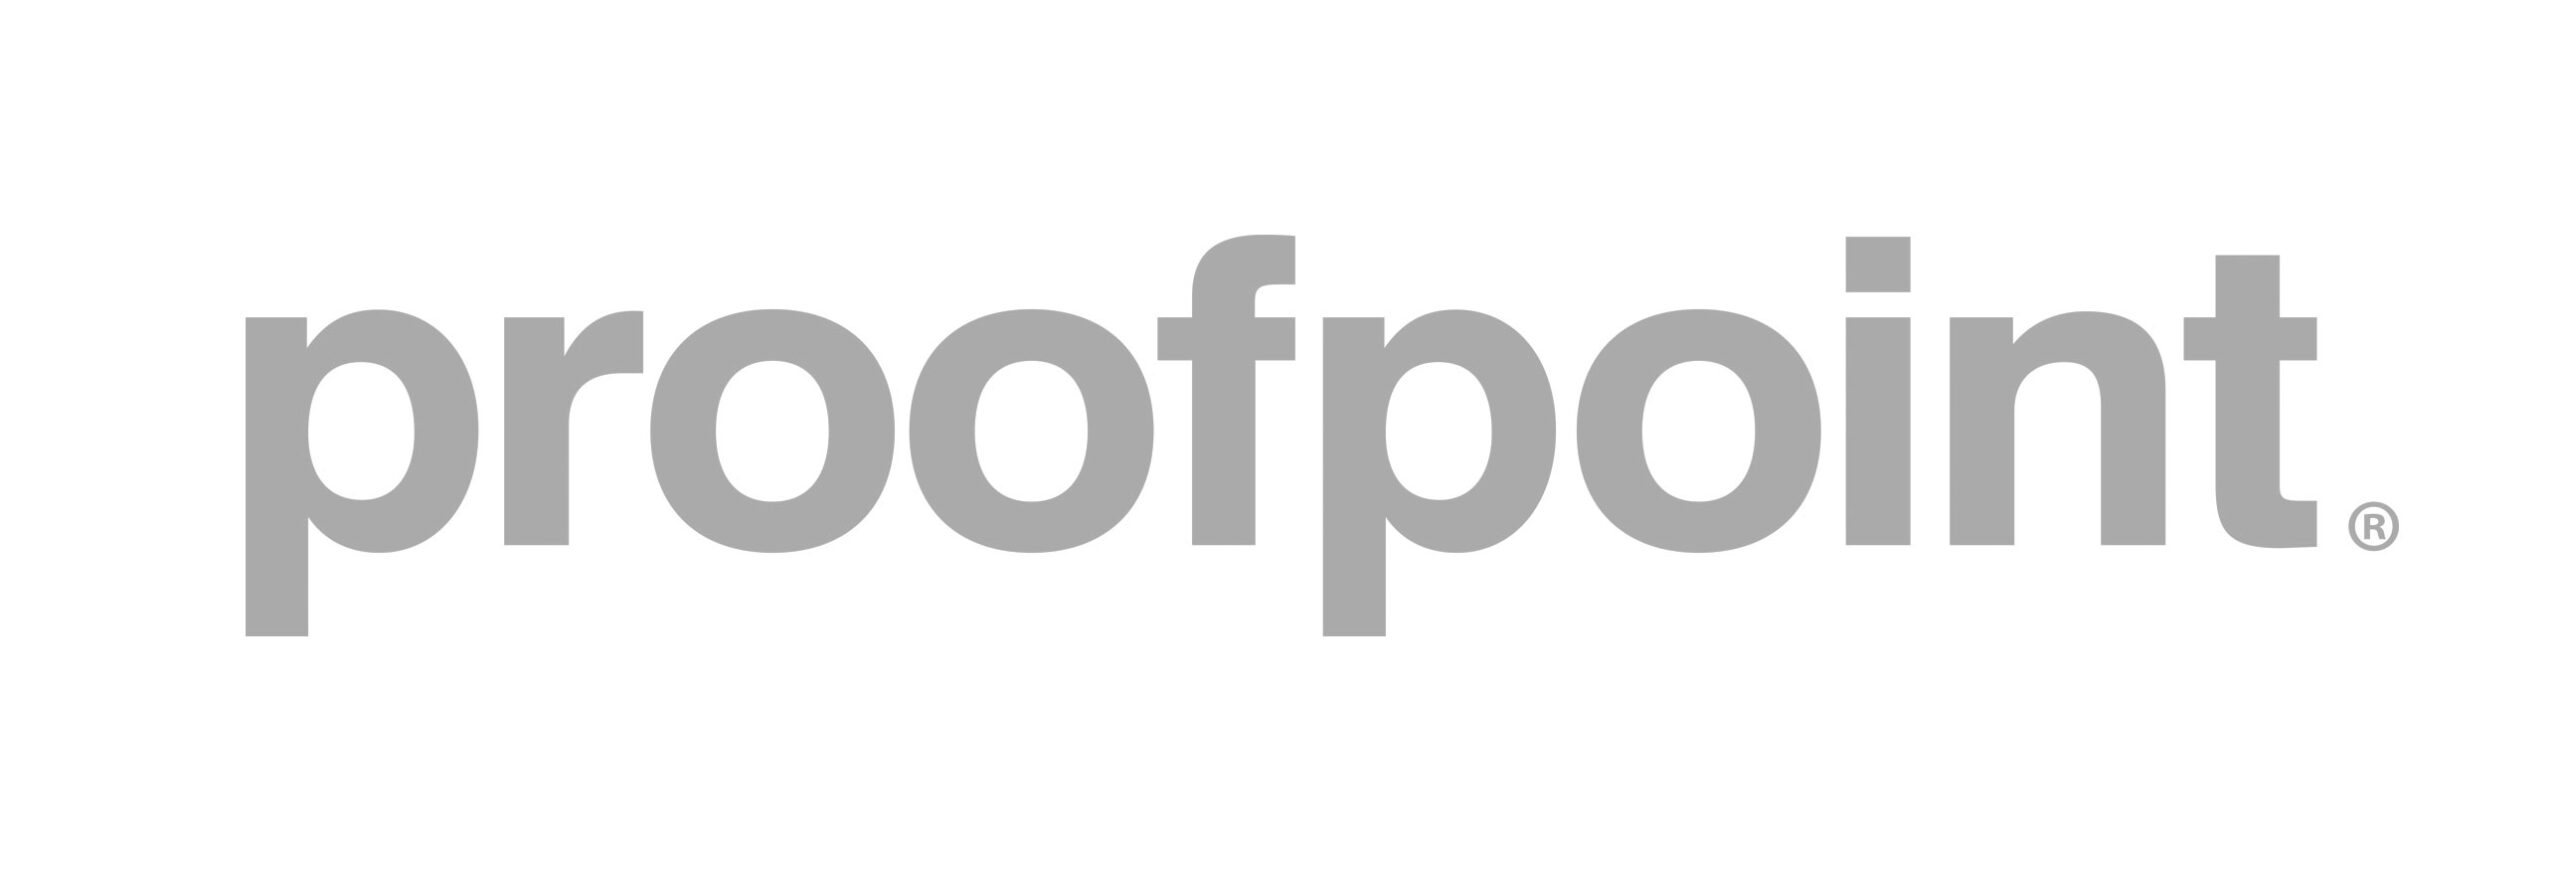 proofpoint logo gray